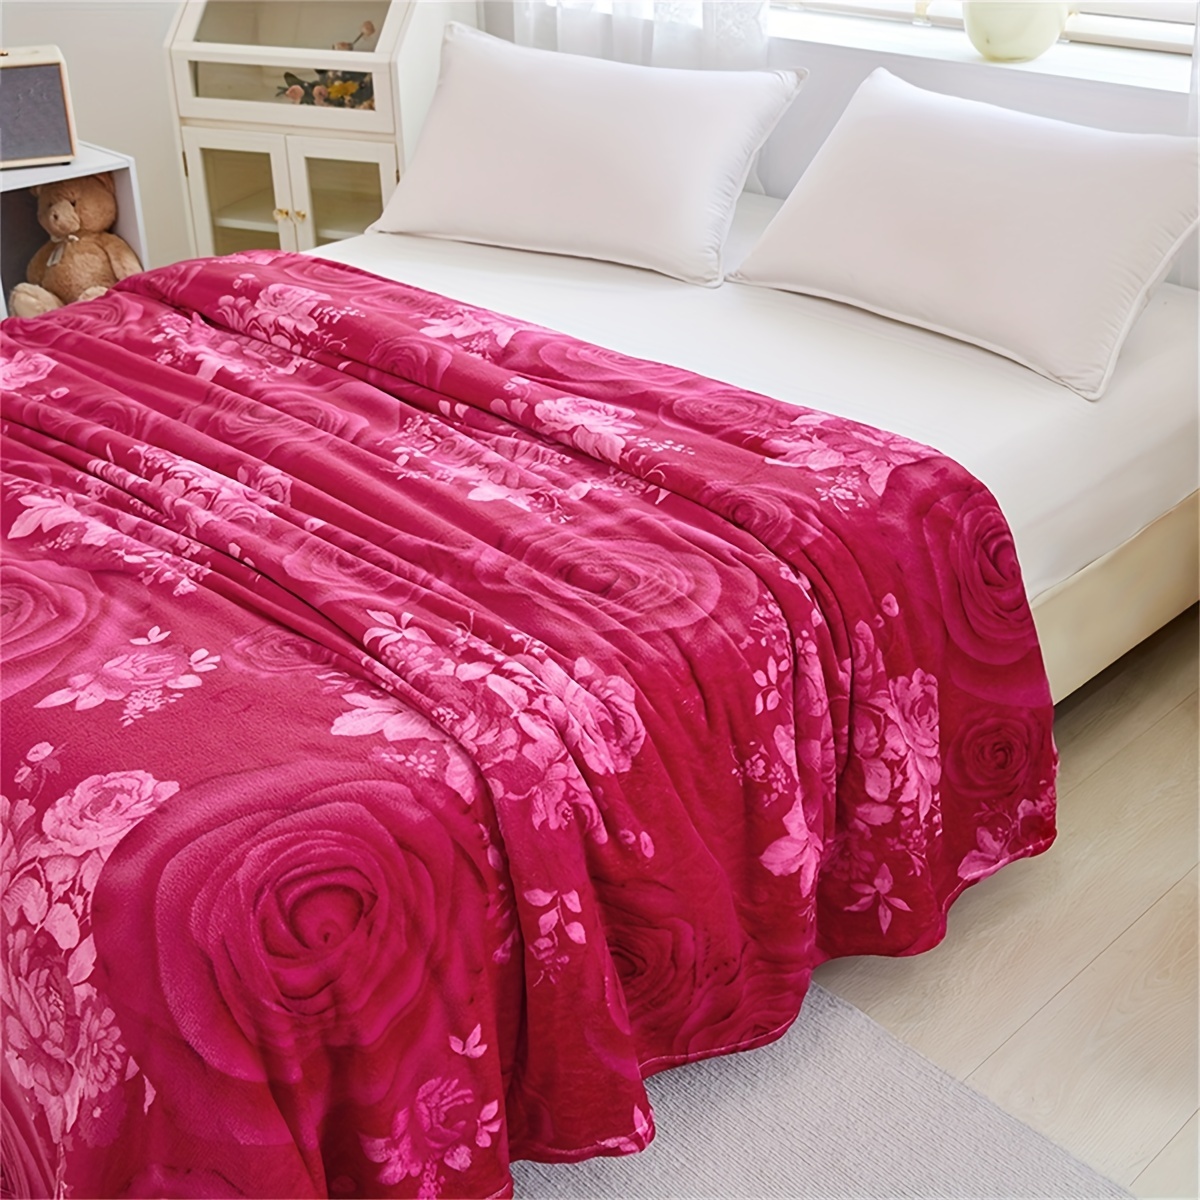 NC Plush Fleece Blanket For Bed,Lightweight Soft Black Red Floral  Blanket,Queen 75x91